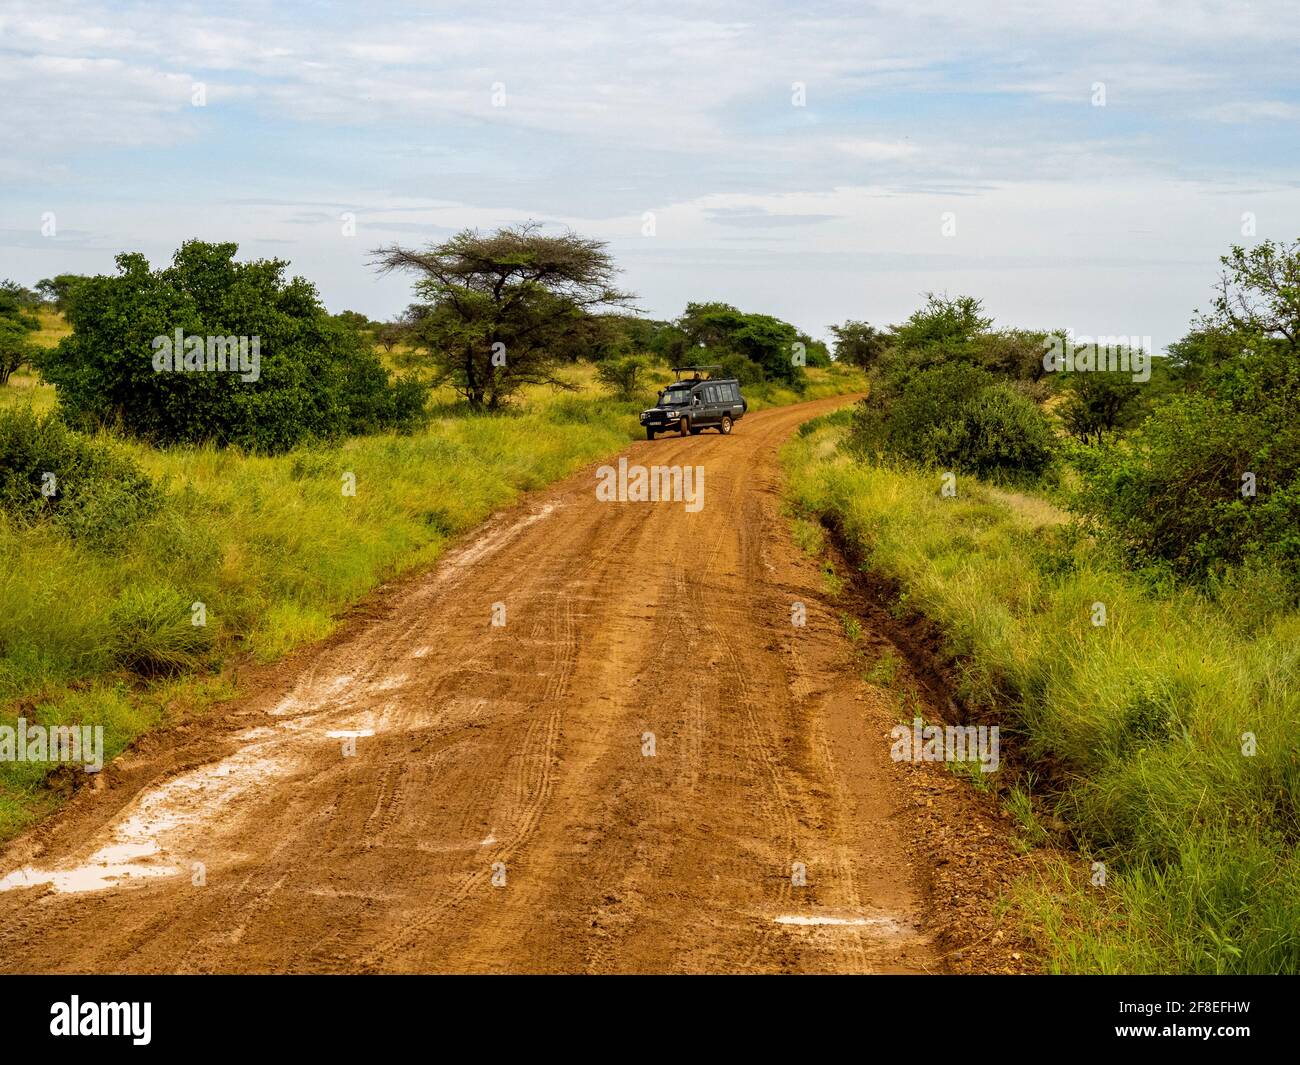 Serengeti National Park, Tanzania, Africa - February 29, 2020: Safari Jeeps parked along dirt road in Serengeti National Park Stock Photo